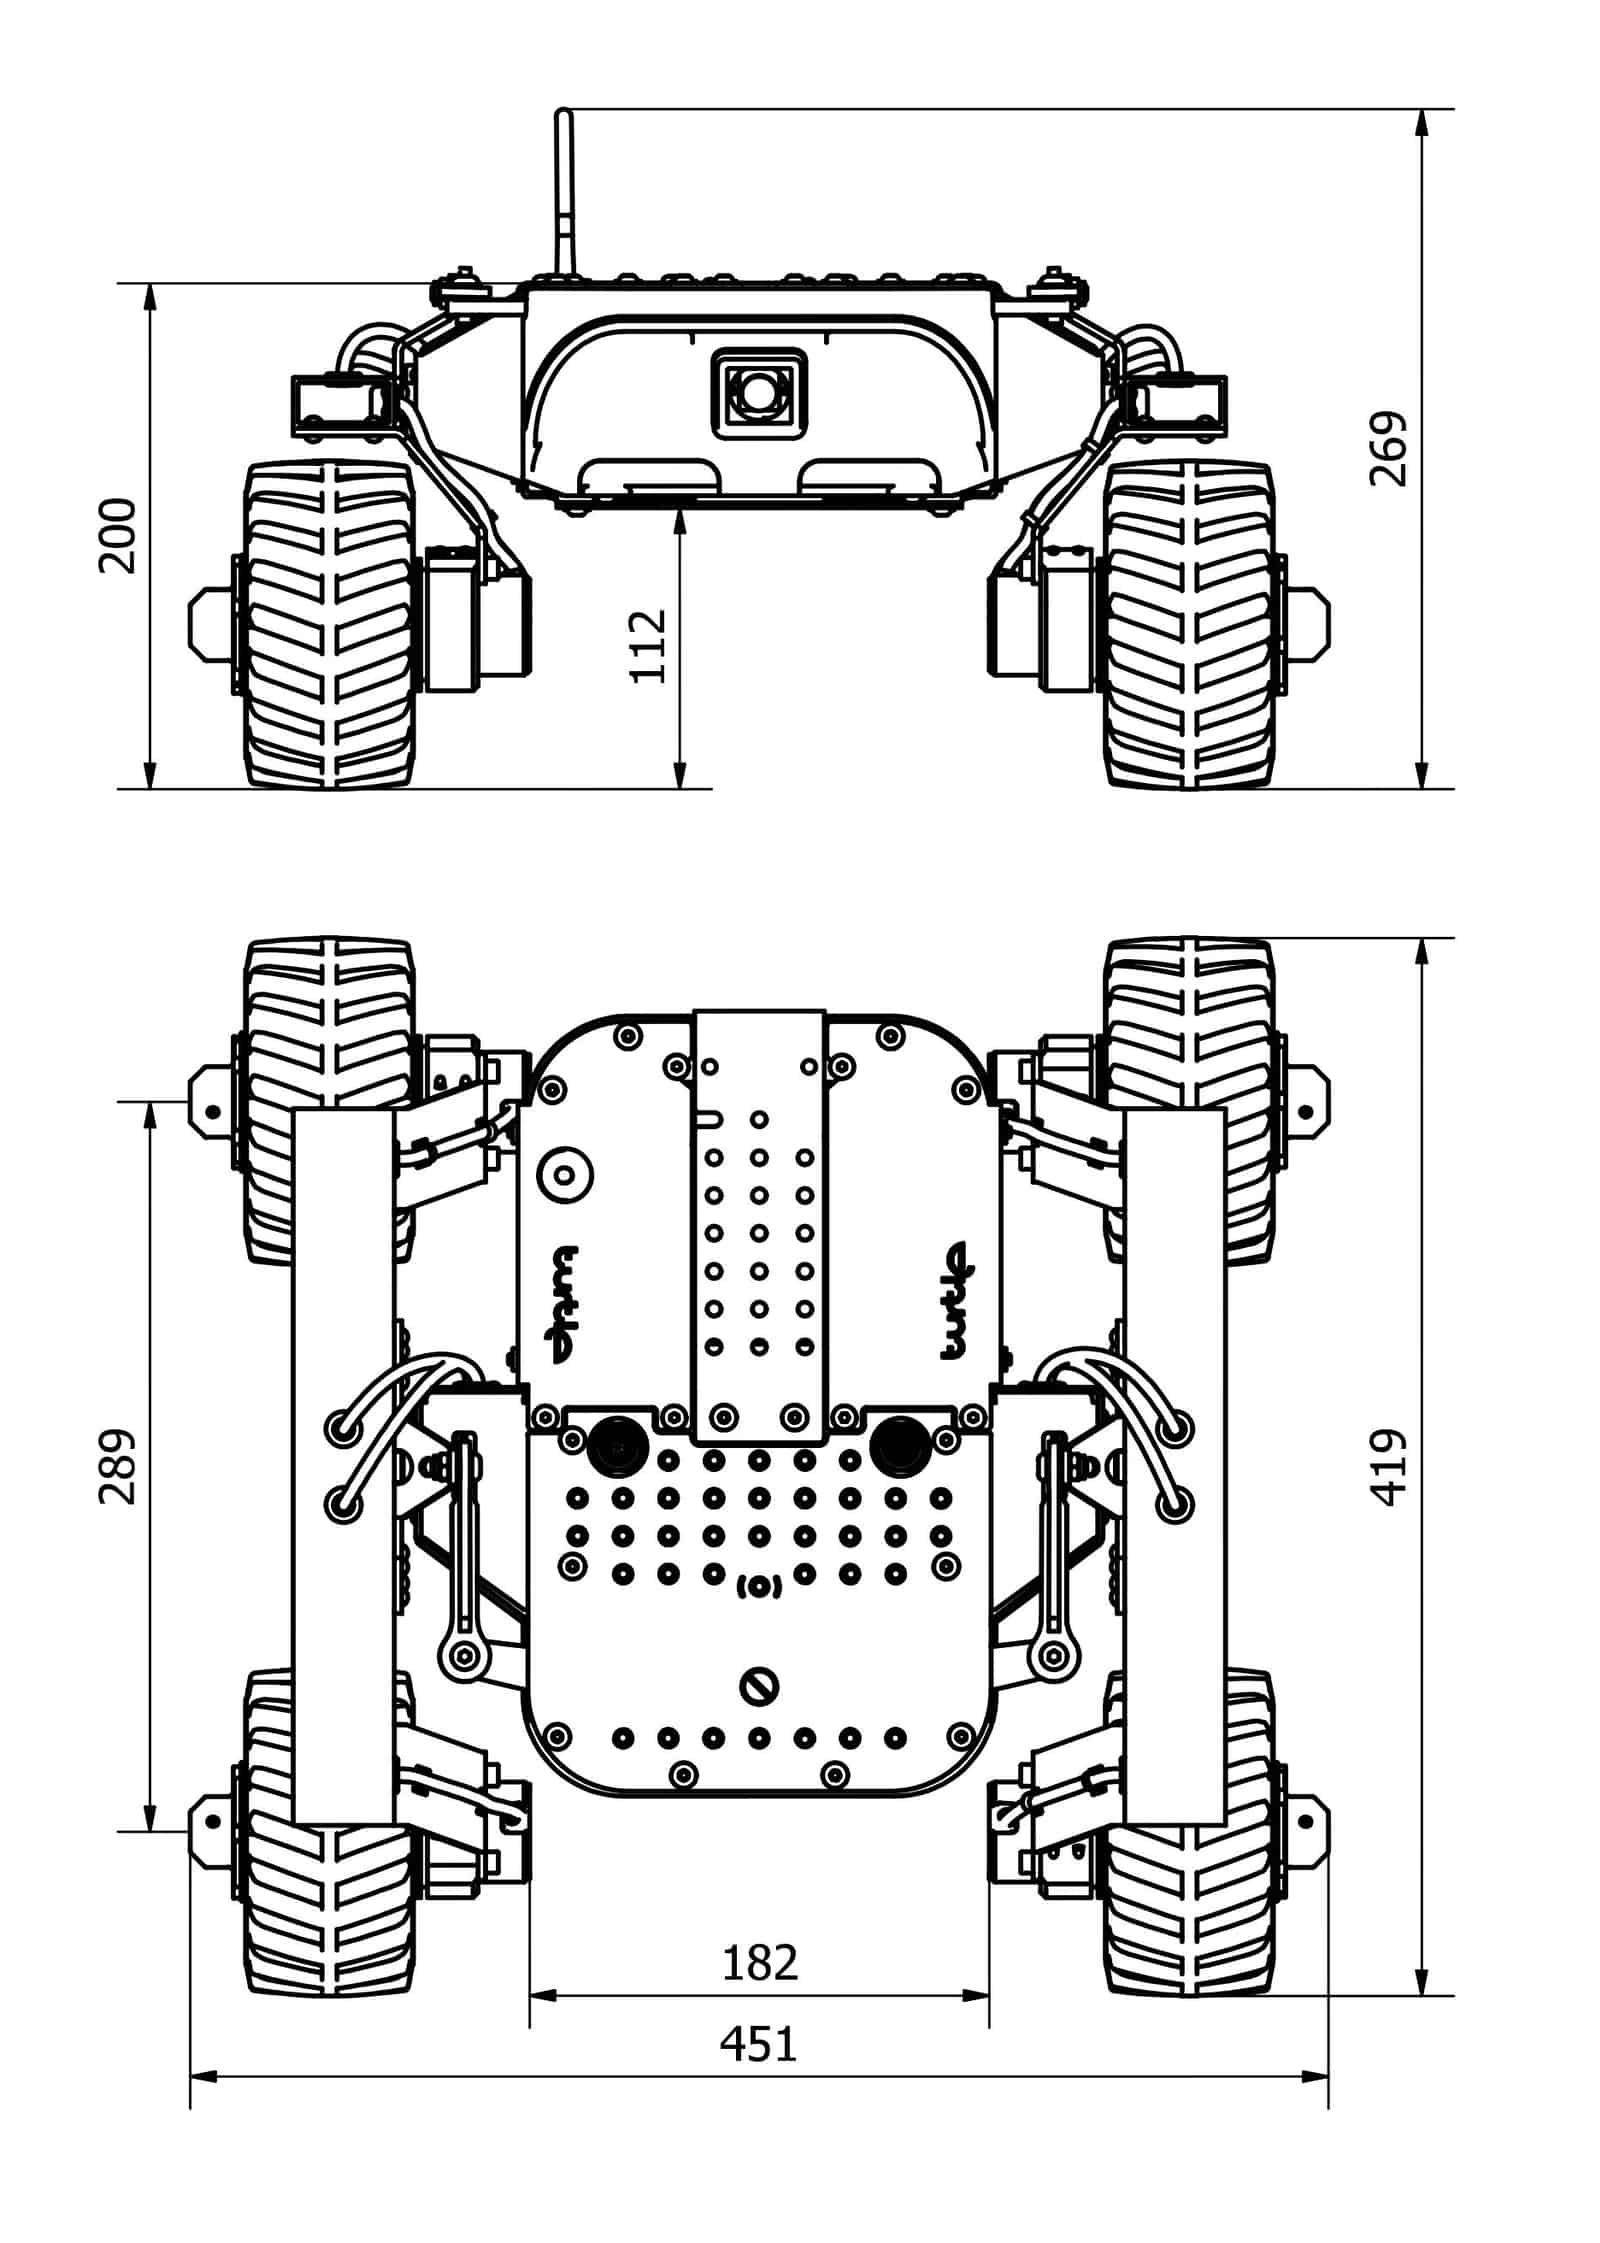 Leo Rover v1.8 Developer Kit - Click to Enlarge